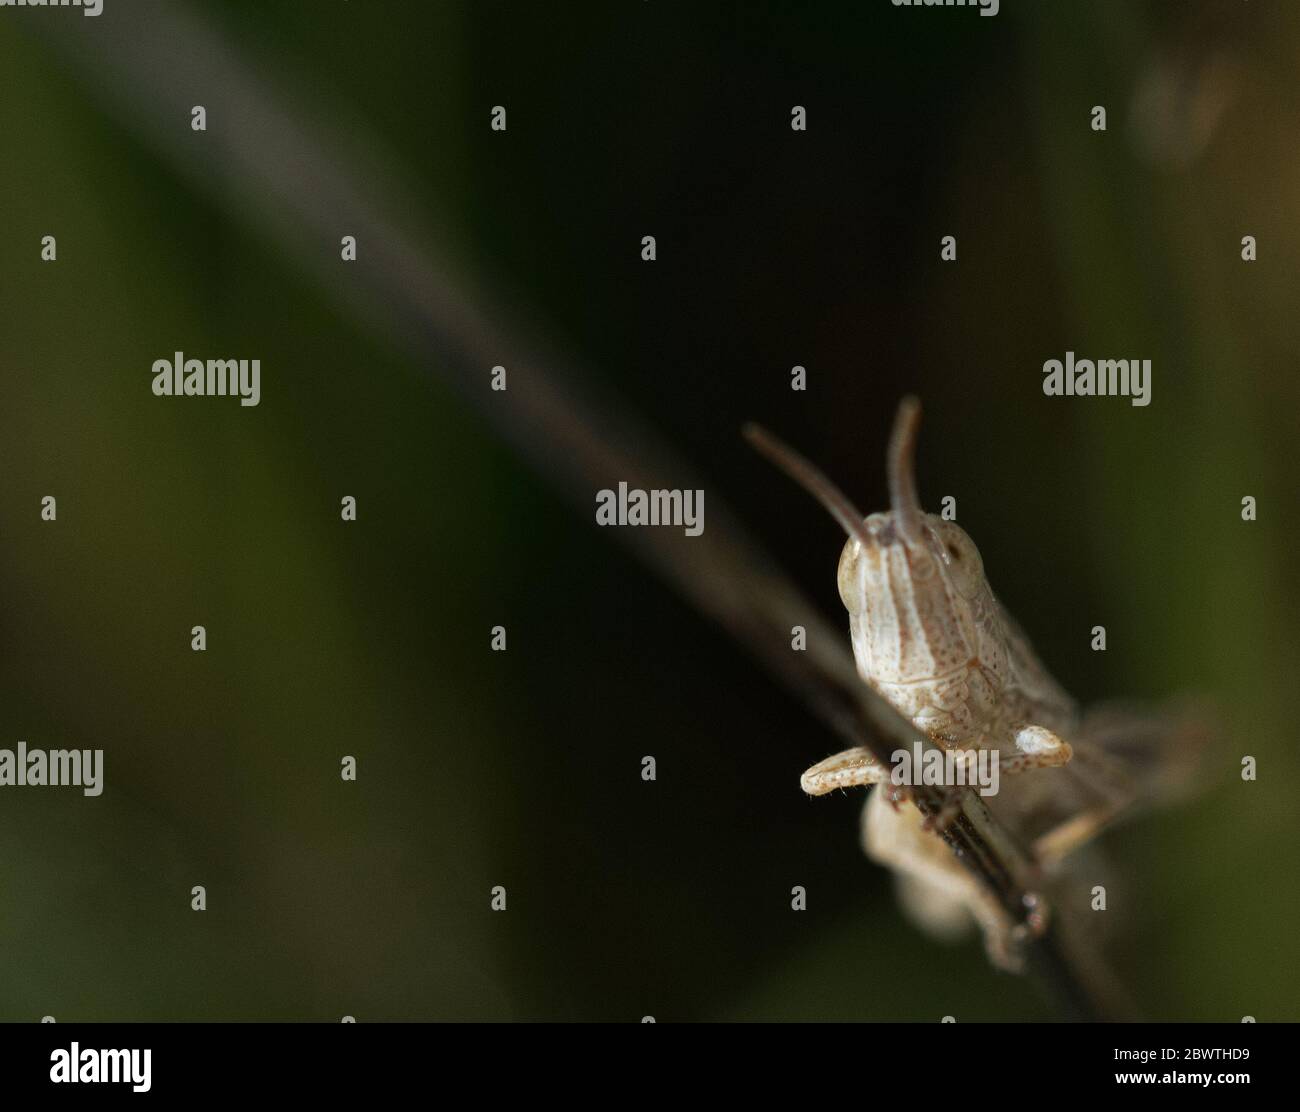 grasshopper on plant in macro Stock Photo